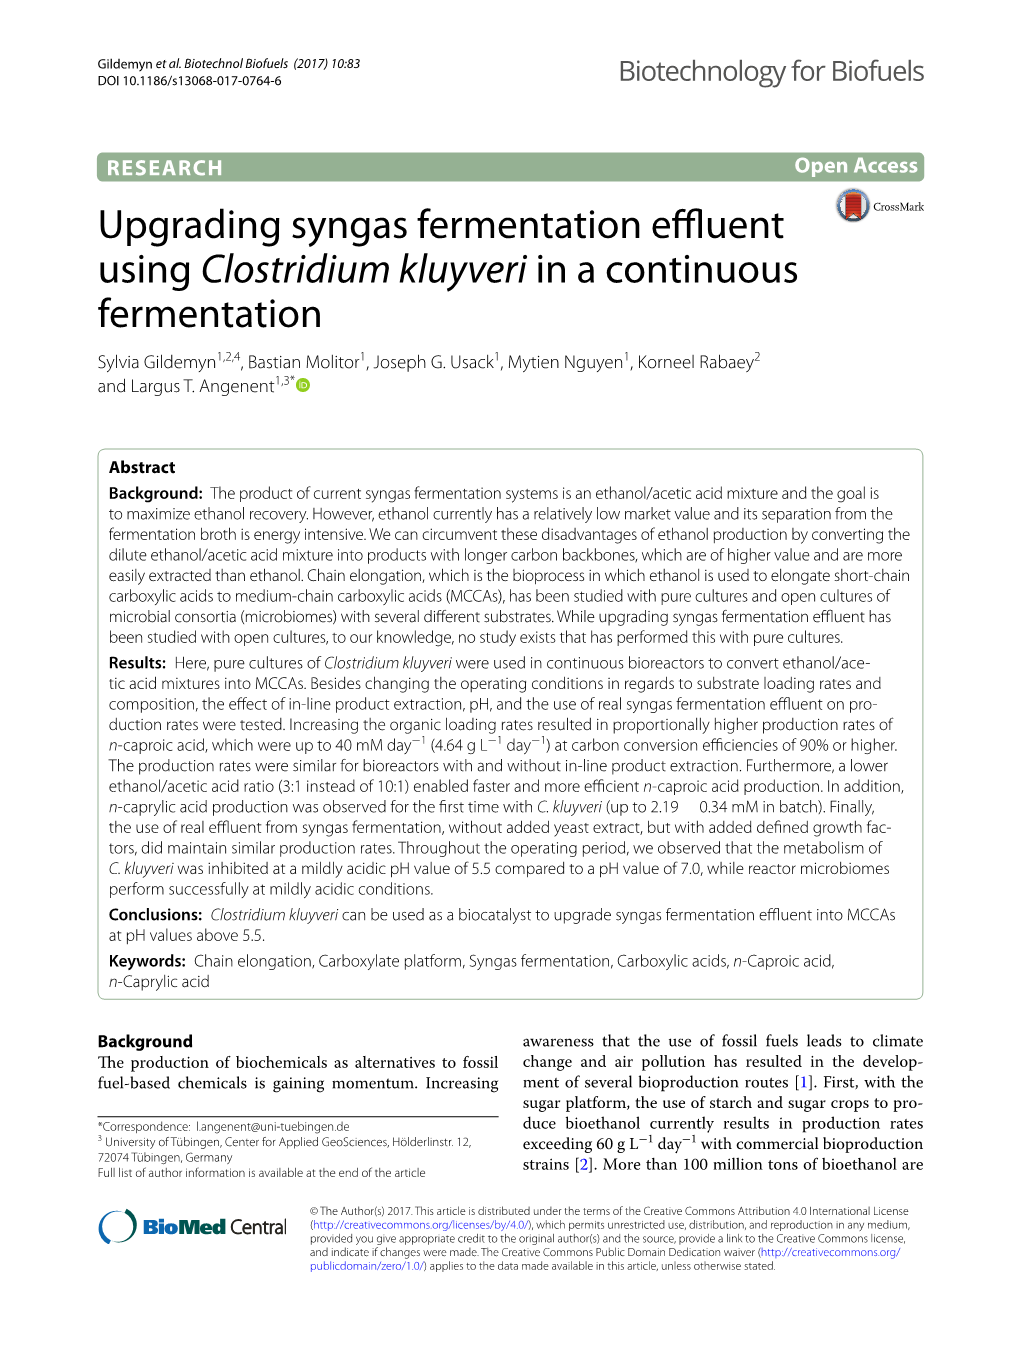 Upgrading Syngas Fermentation Effluent Using Clostridium Kluyveri in a Continuous Fermentation Sylvia Gildemyn1,2,4, Bastian Molitor1, Joseph G